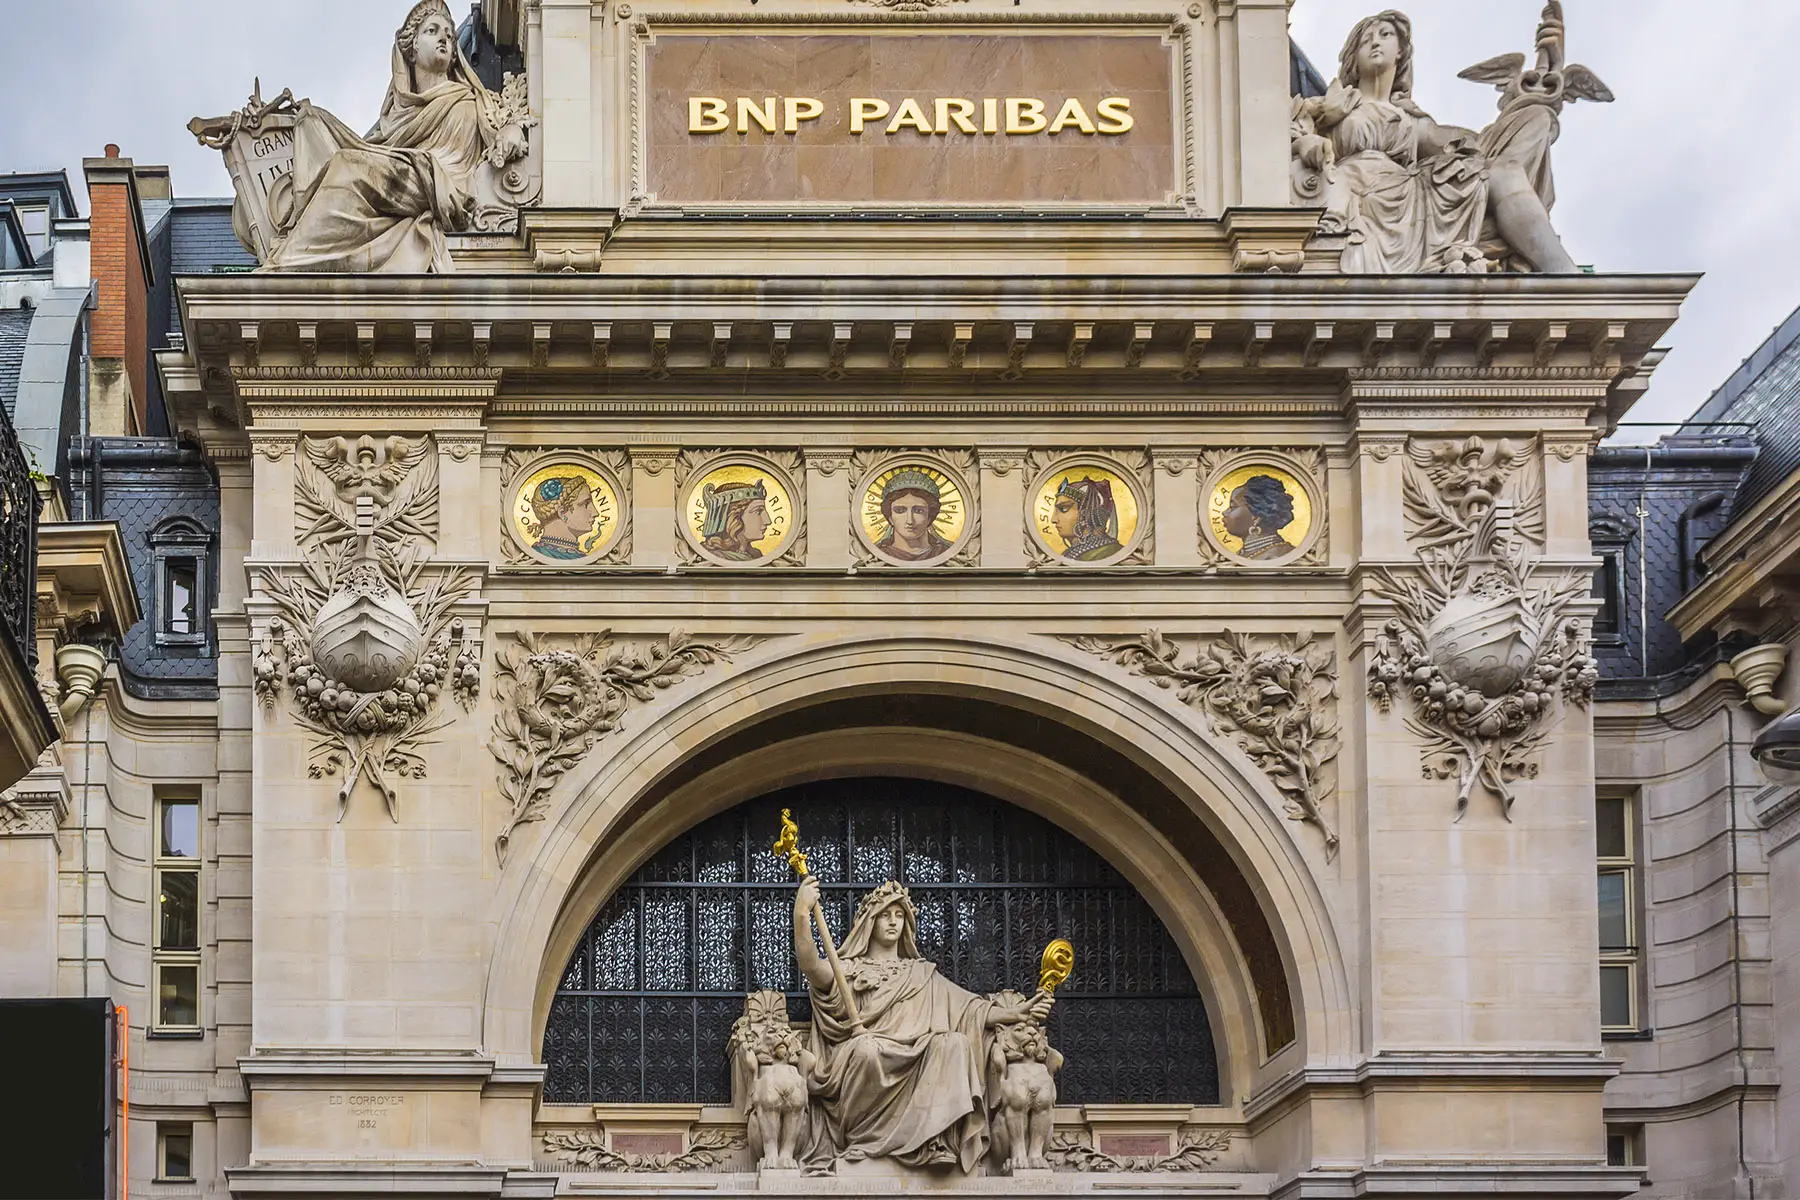 BNP Paribas building in Paris